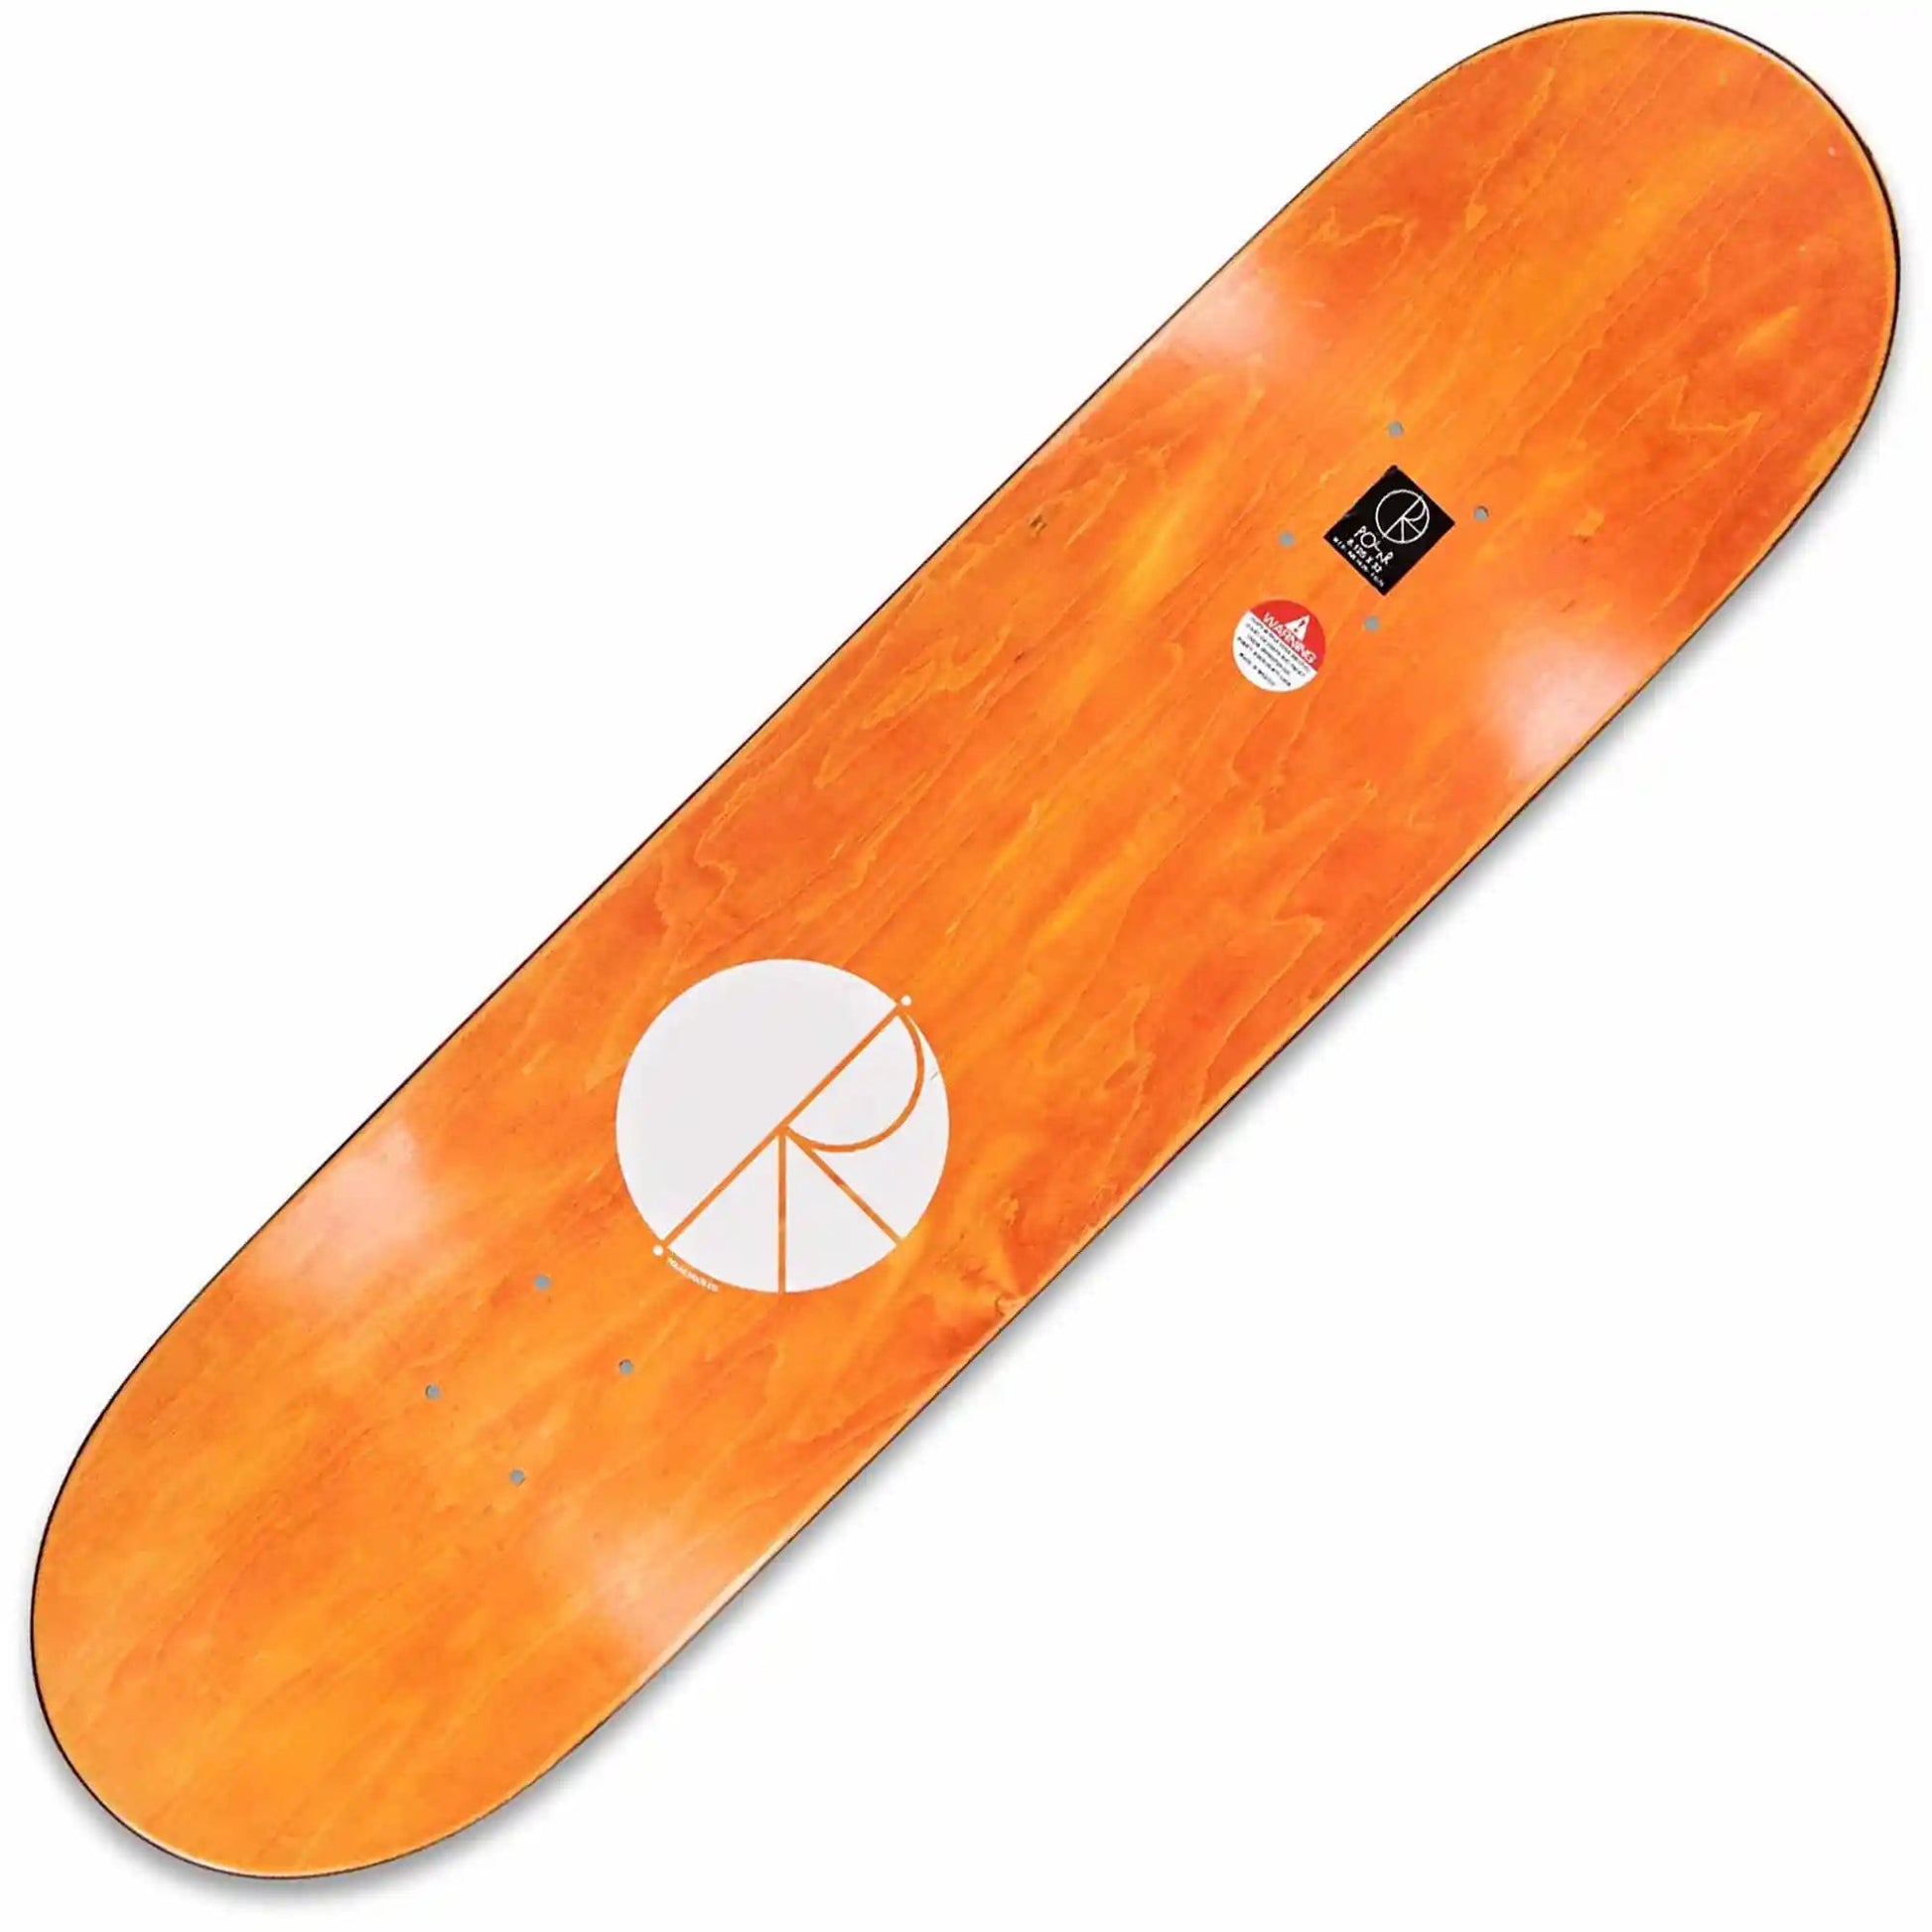 Polar Paul Grund "Rider" Deck (8.125") - Tiki Room Skateboards - 2